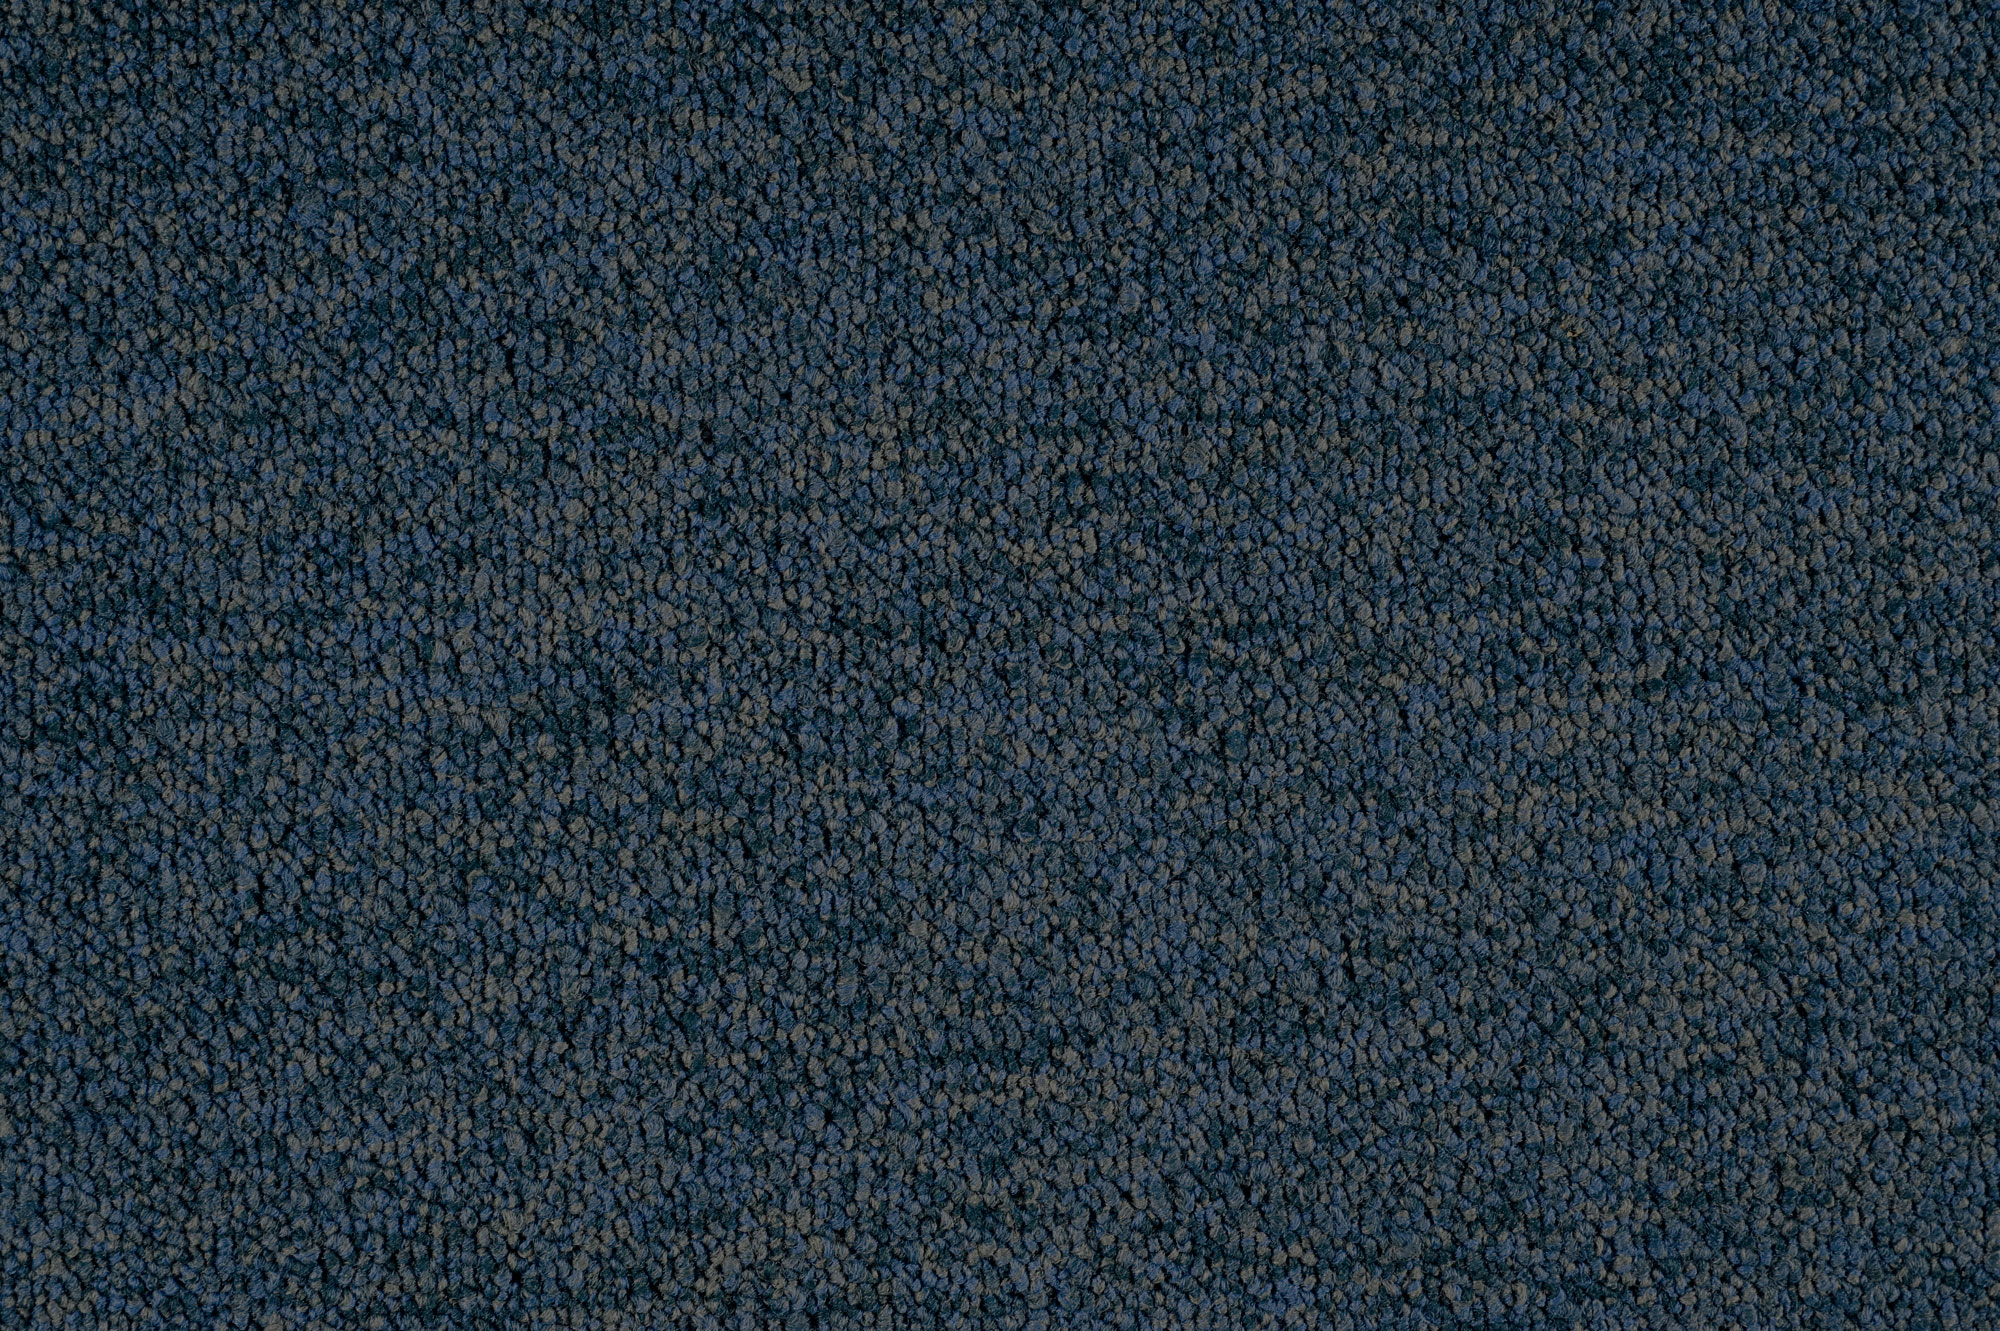 ESD Carpet STOPS Static